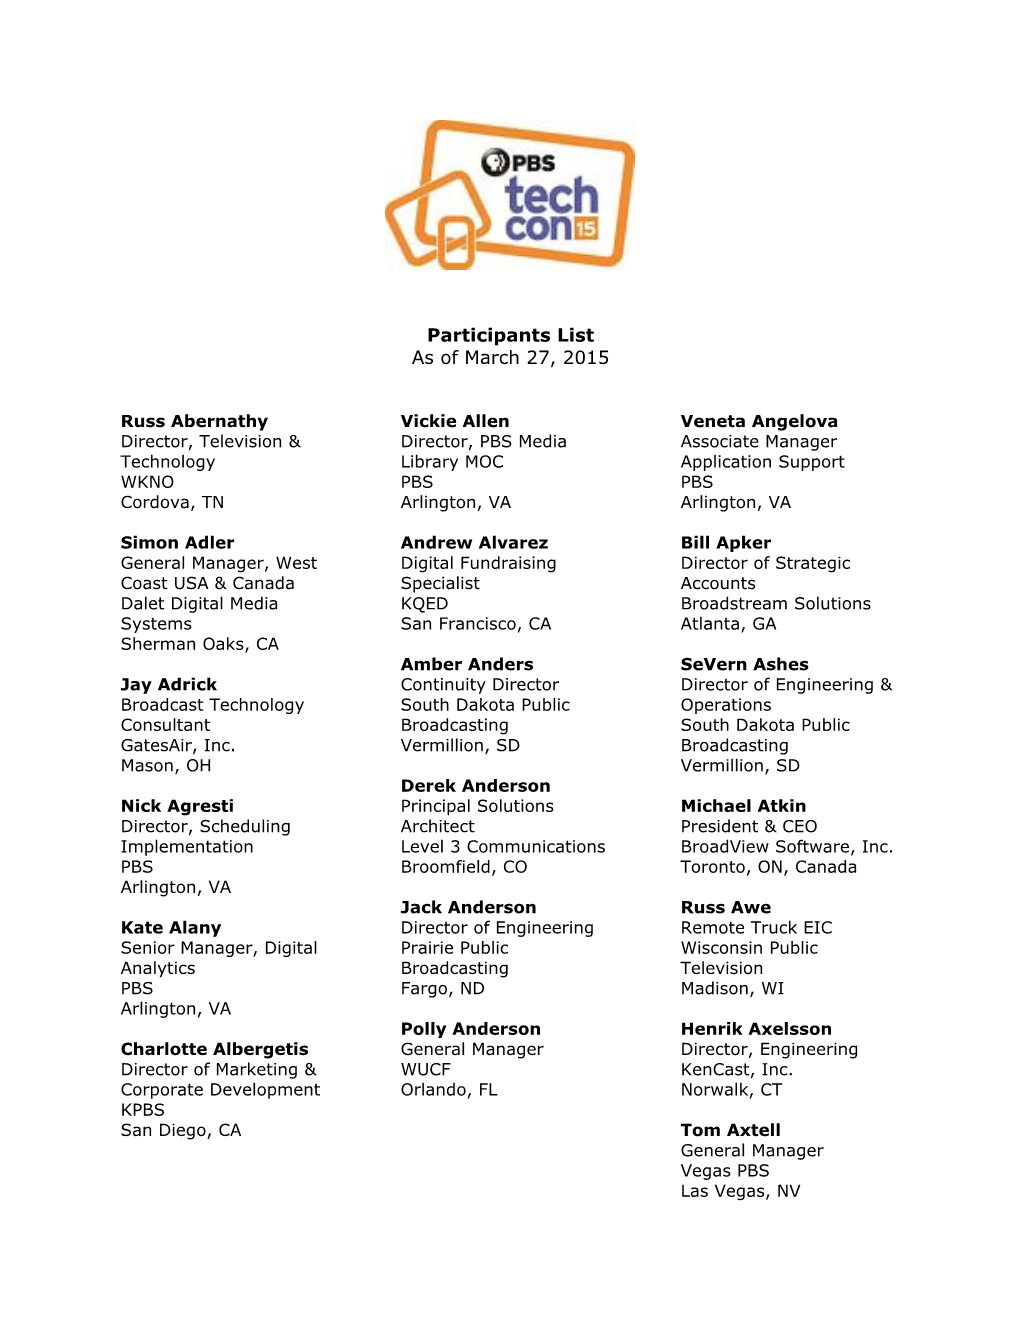 Participants List As of March 27, 2015